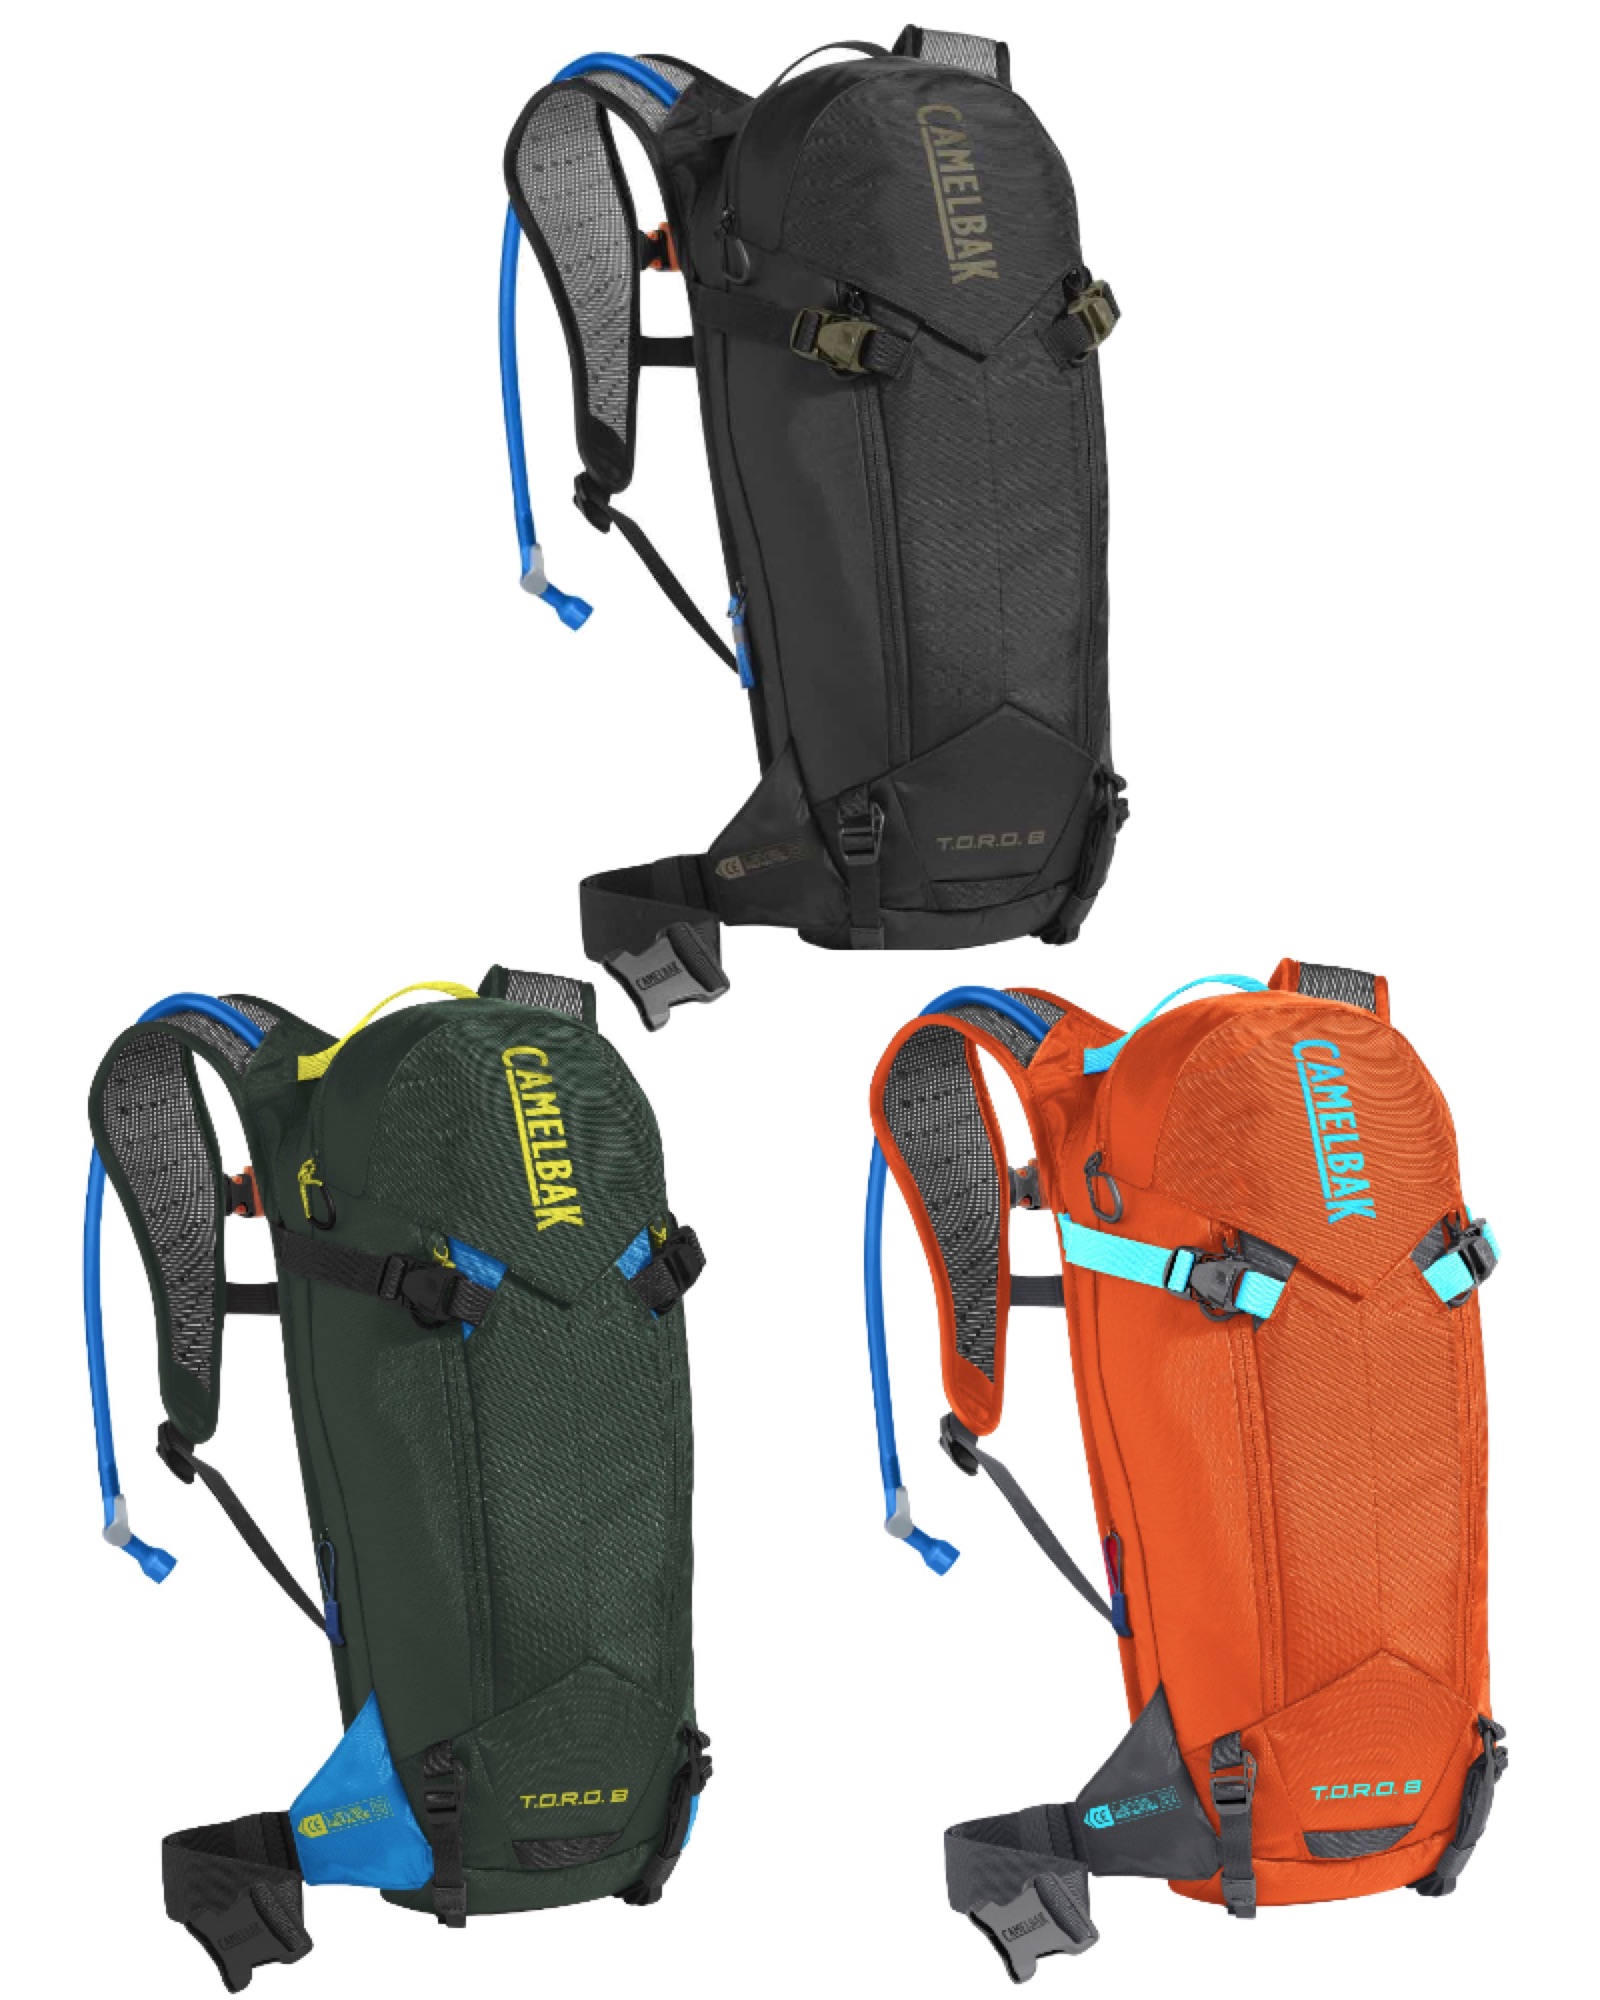 Black/Olive Camelbak Toro 14 3L Protection Hydration Backpack 